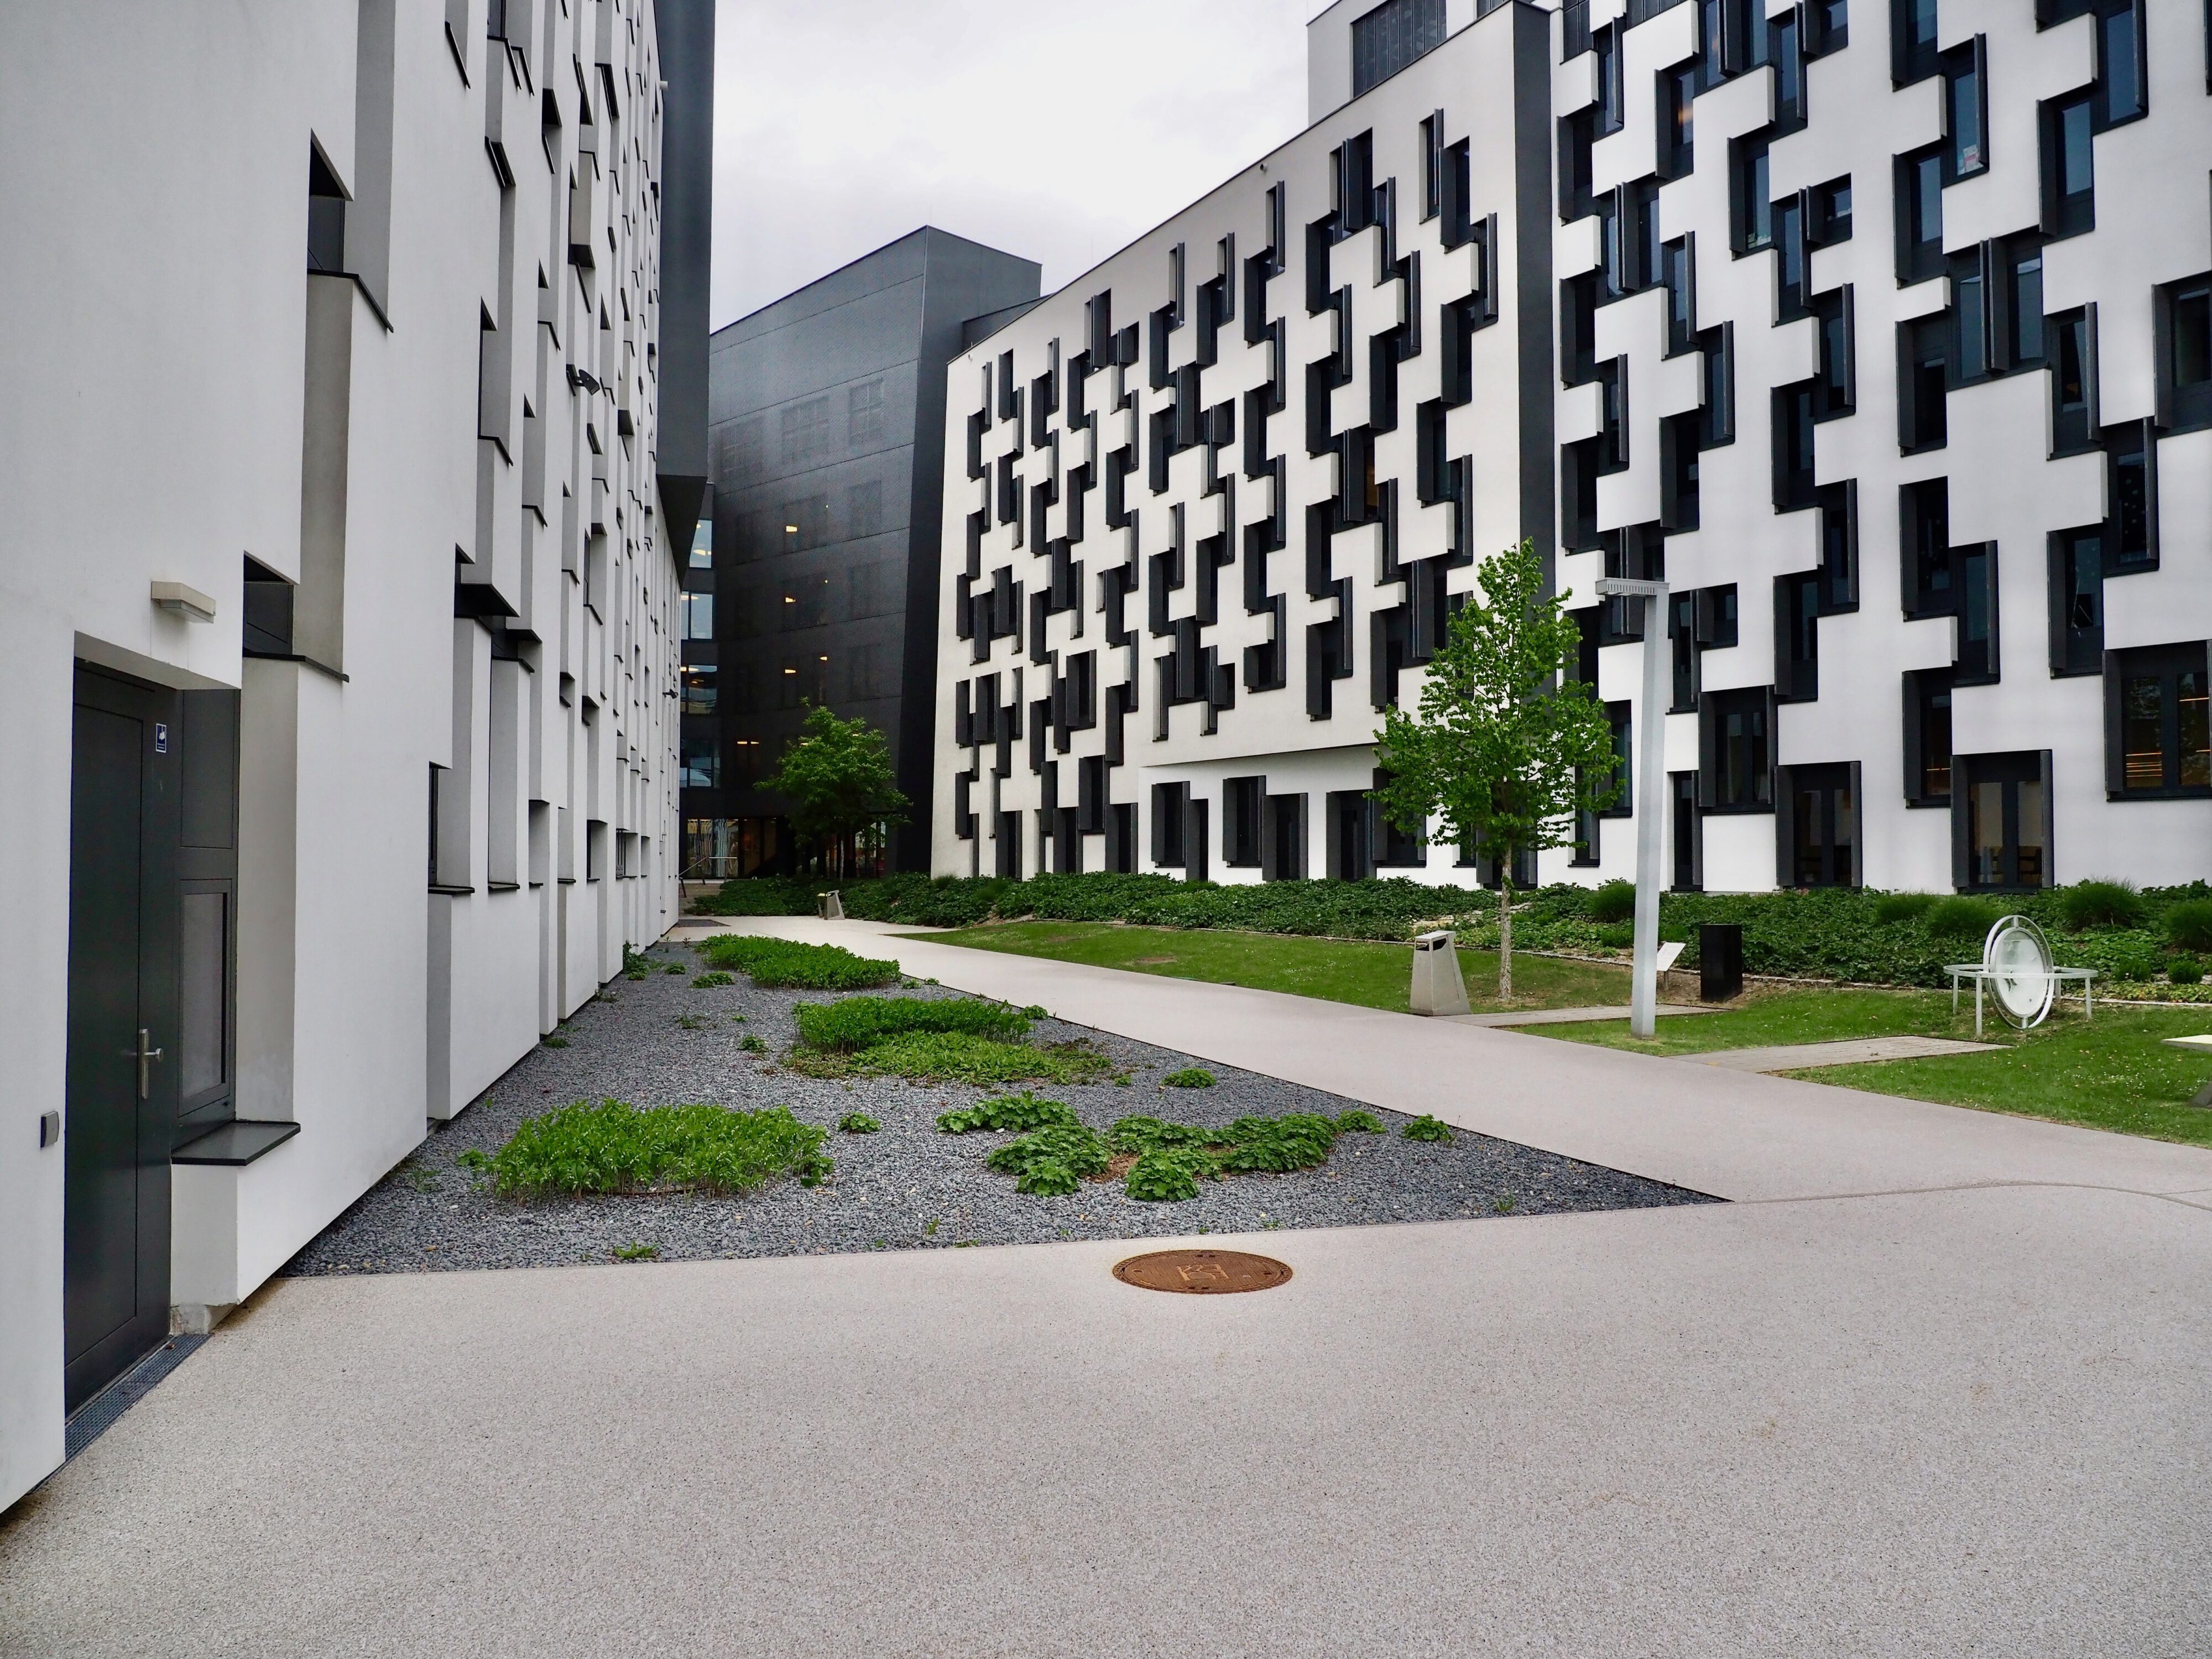 WU Wien Department 4 by Estudio Carme Pinós Architects from Barcelona